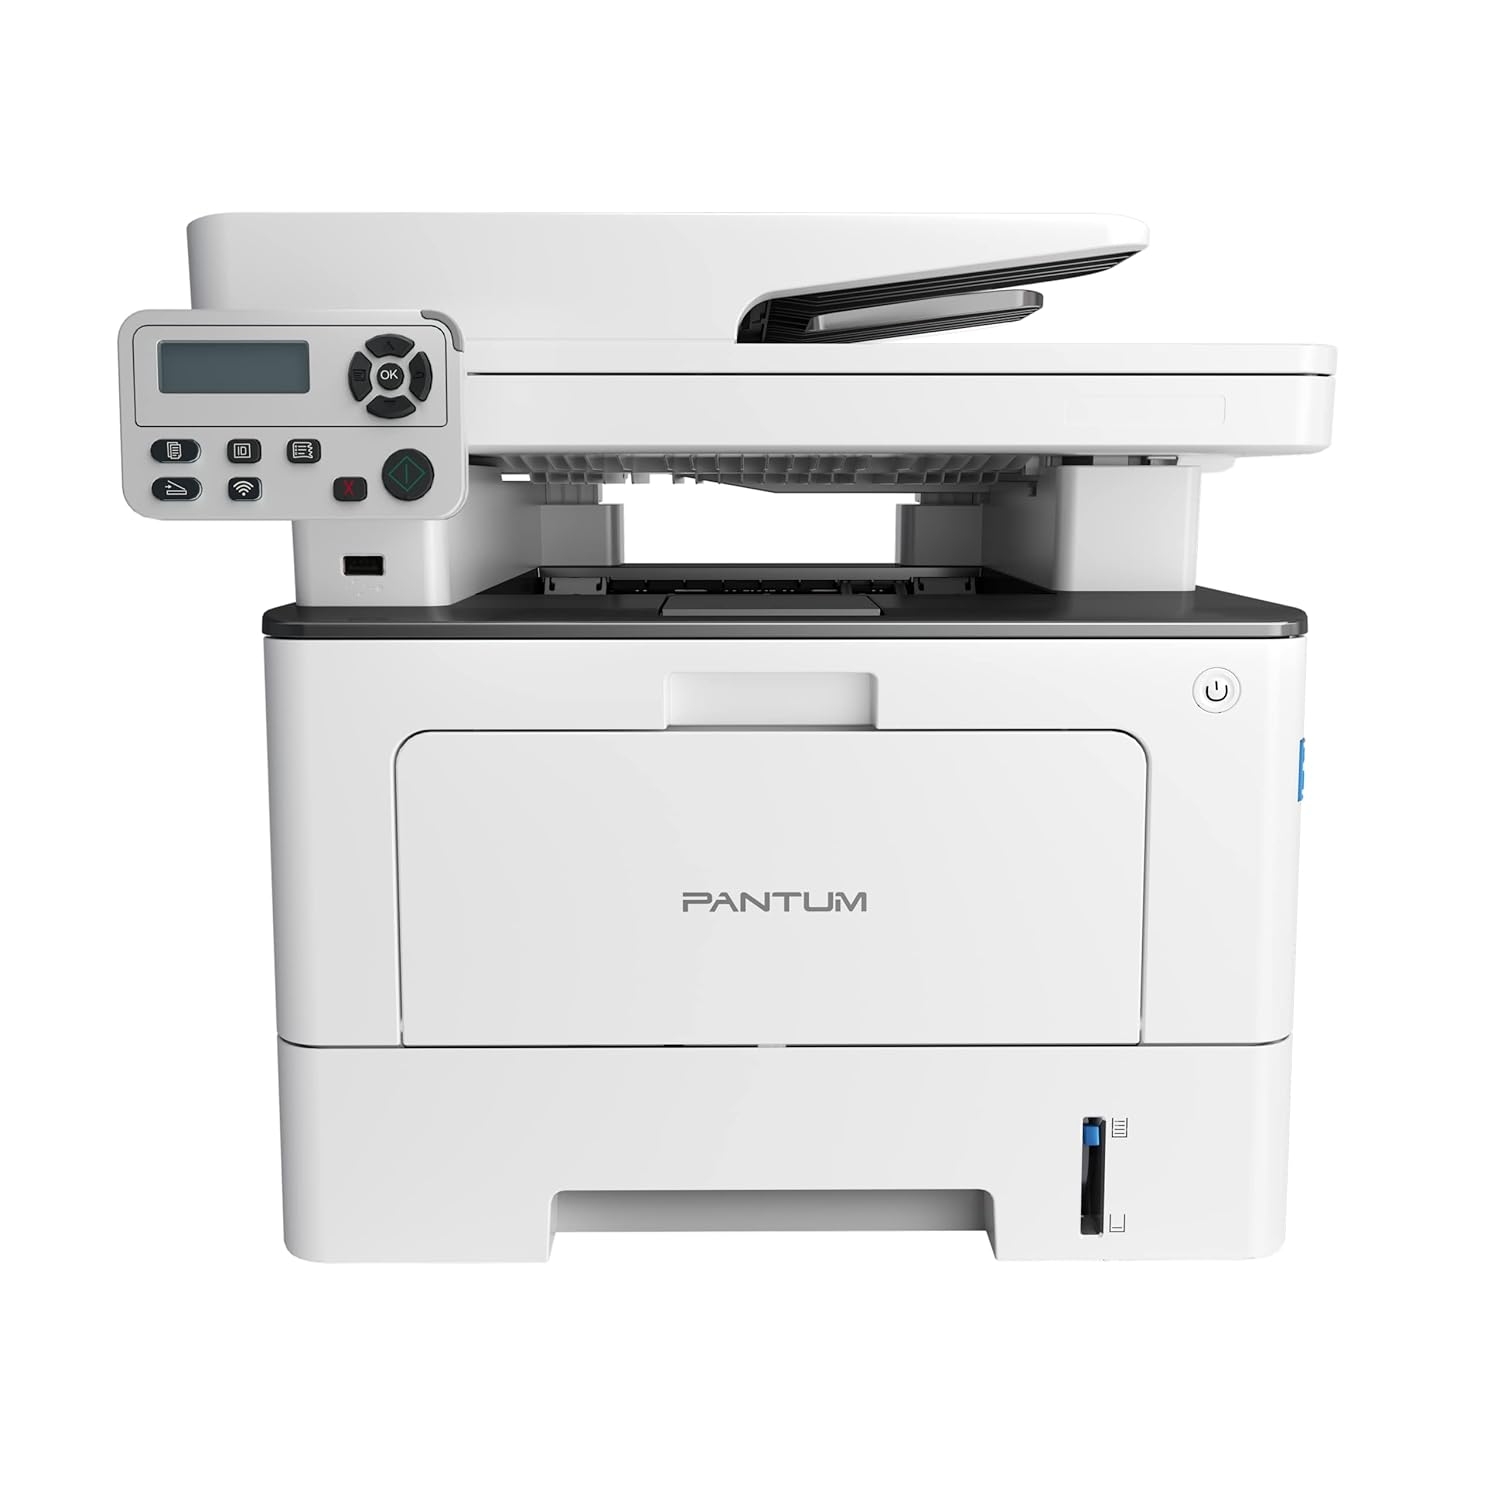 PANTUM BM 5100ADW high Speed,WiFi Multi Function Laser Printer - 40 ppm